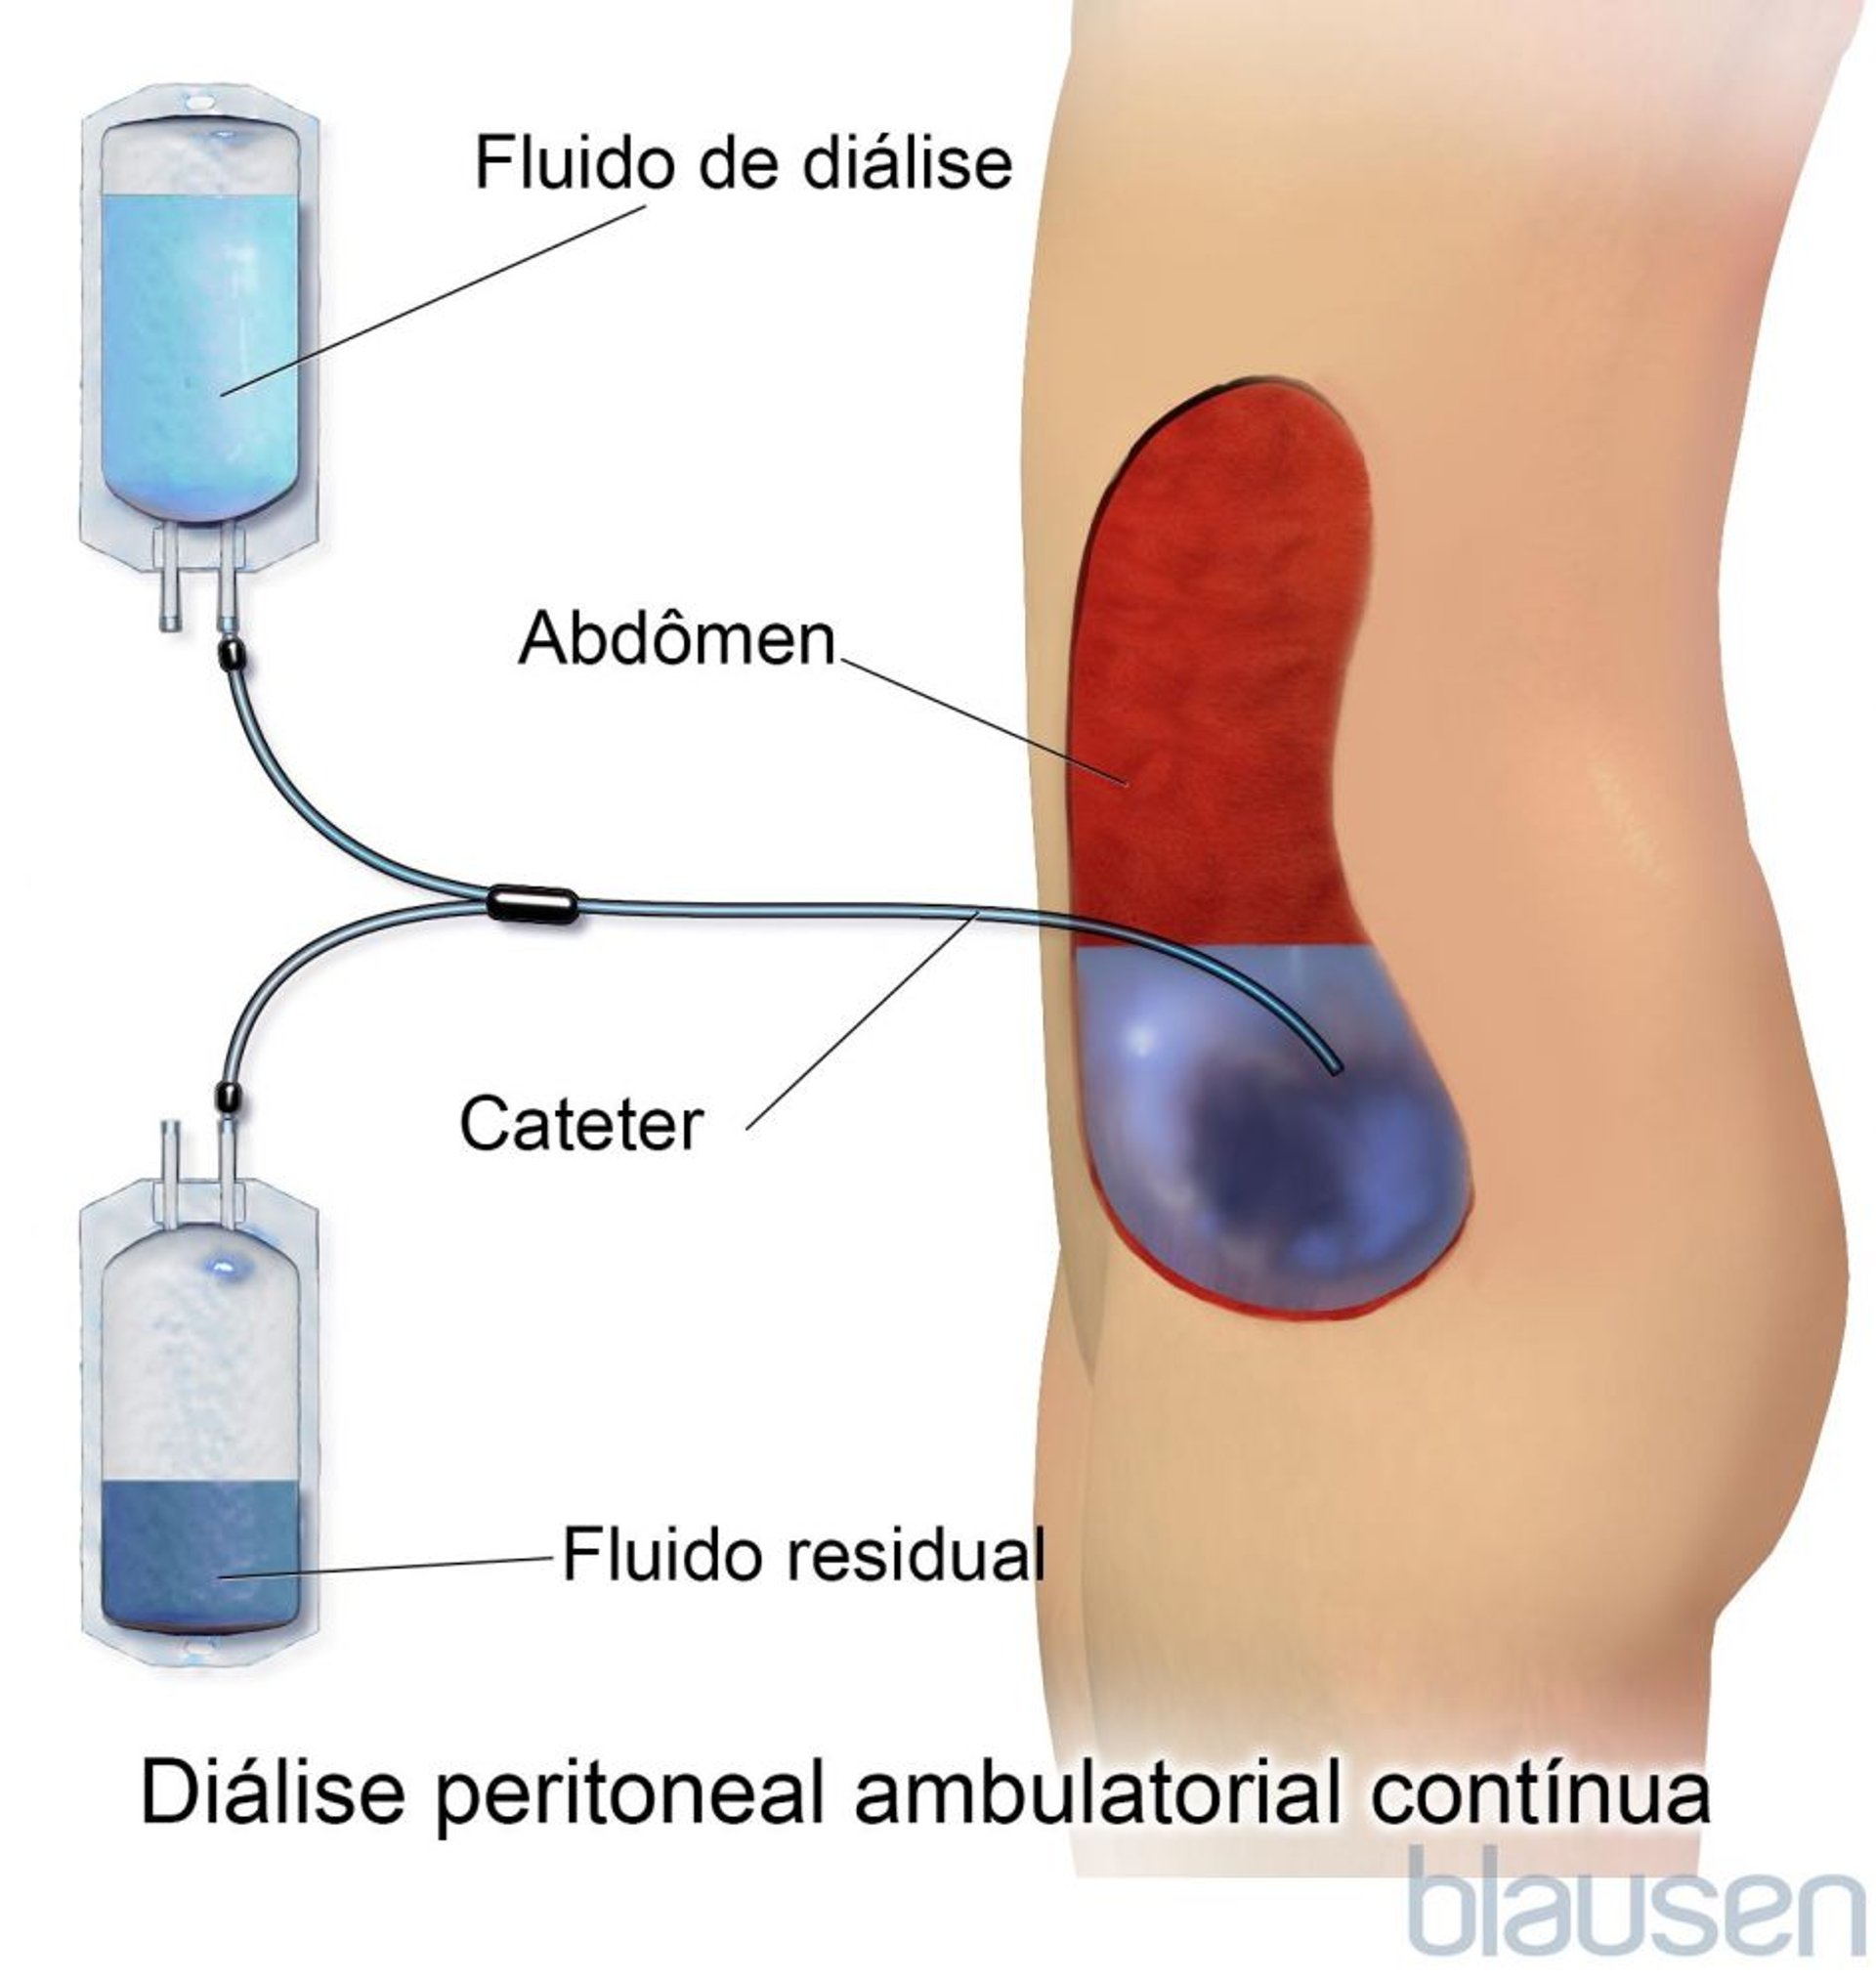 Diálise peritoneal ambulatorial contínua